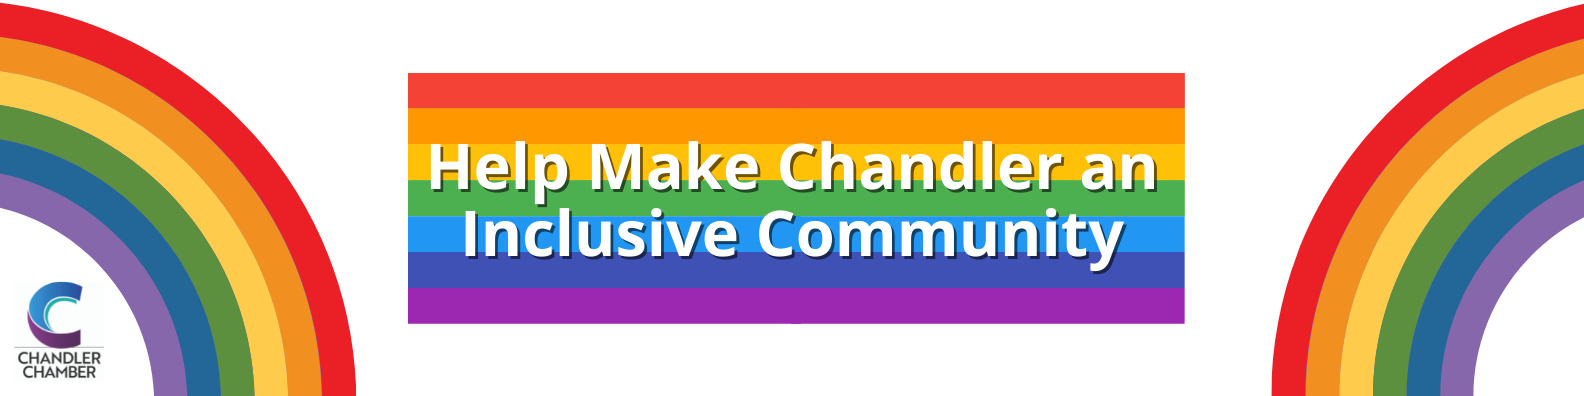 Help Make Chandler an Inclusive Community (1)